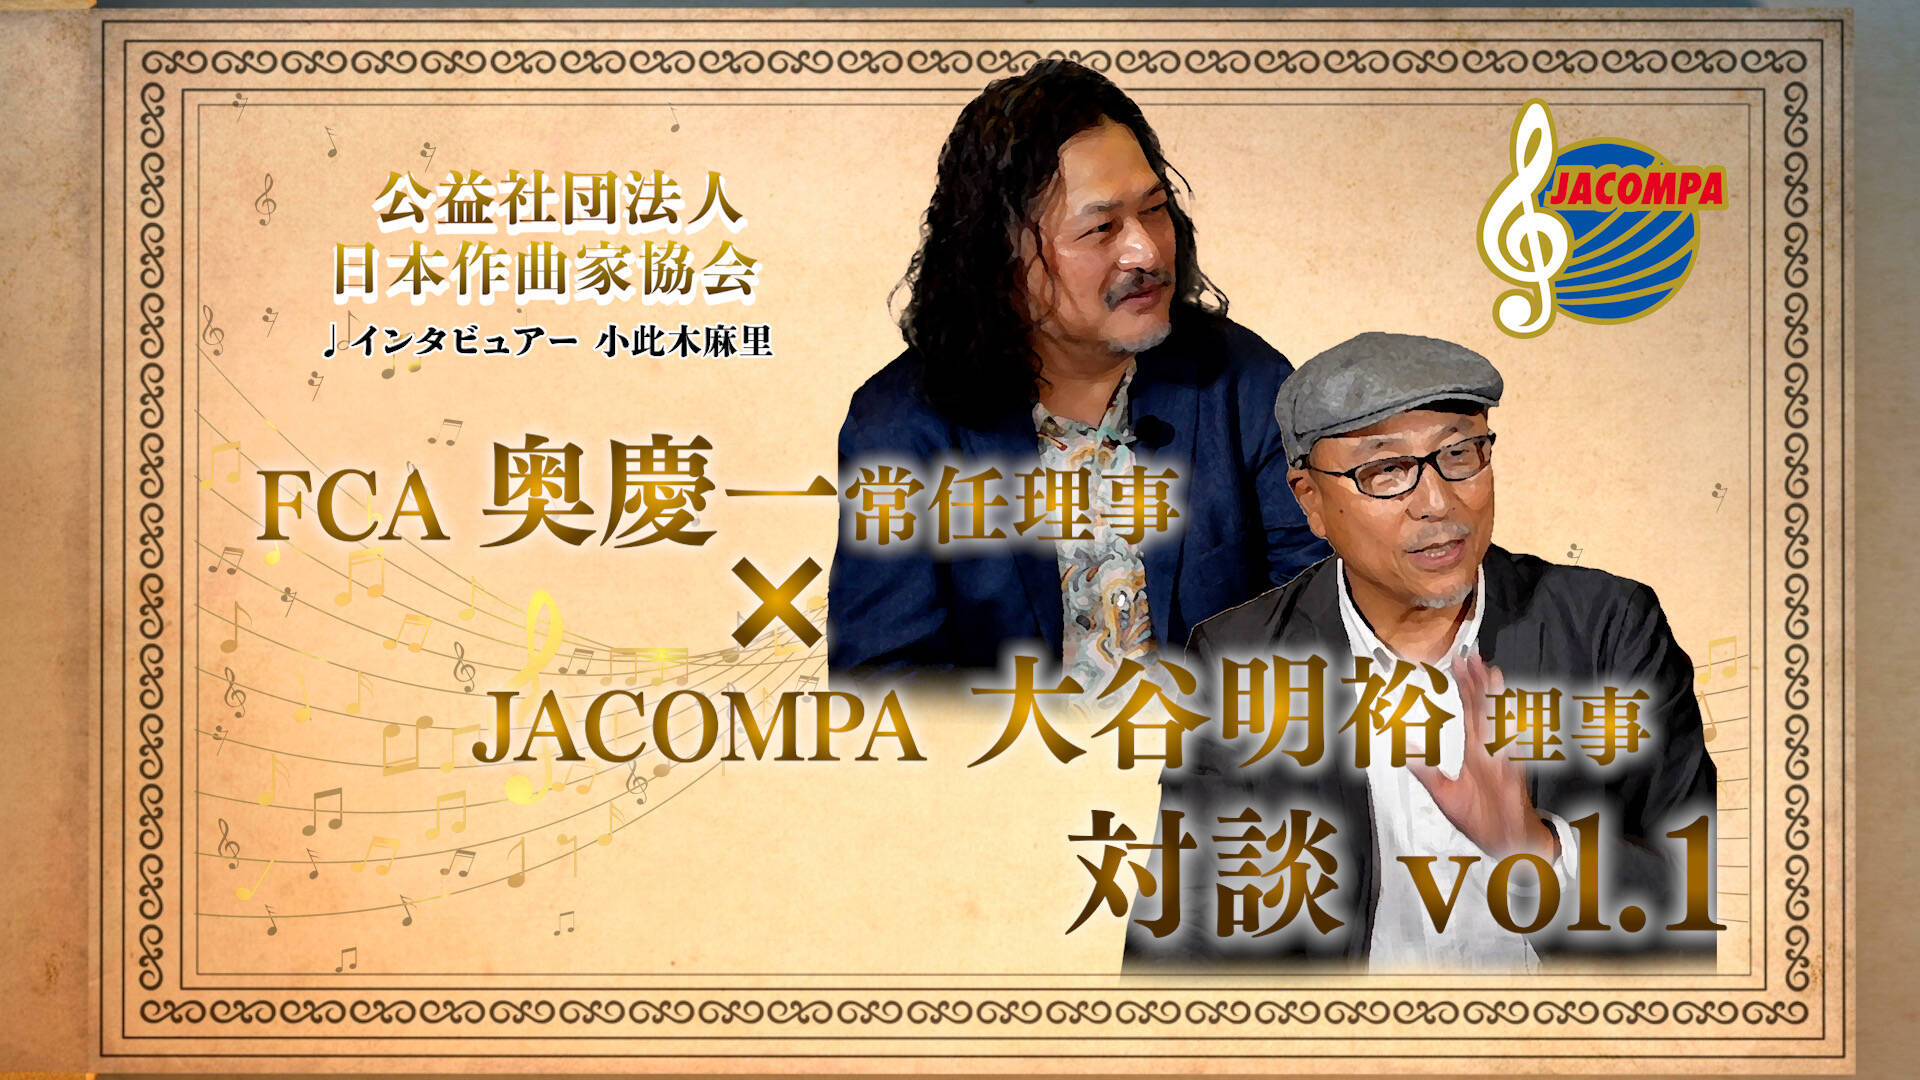 FCA(奥慶一 常任理事) × JACOMPA(大谷明裕 理事) 対談 Vol.1【音楽つづれ織り】